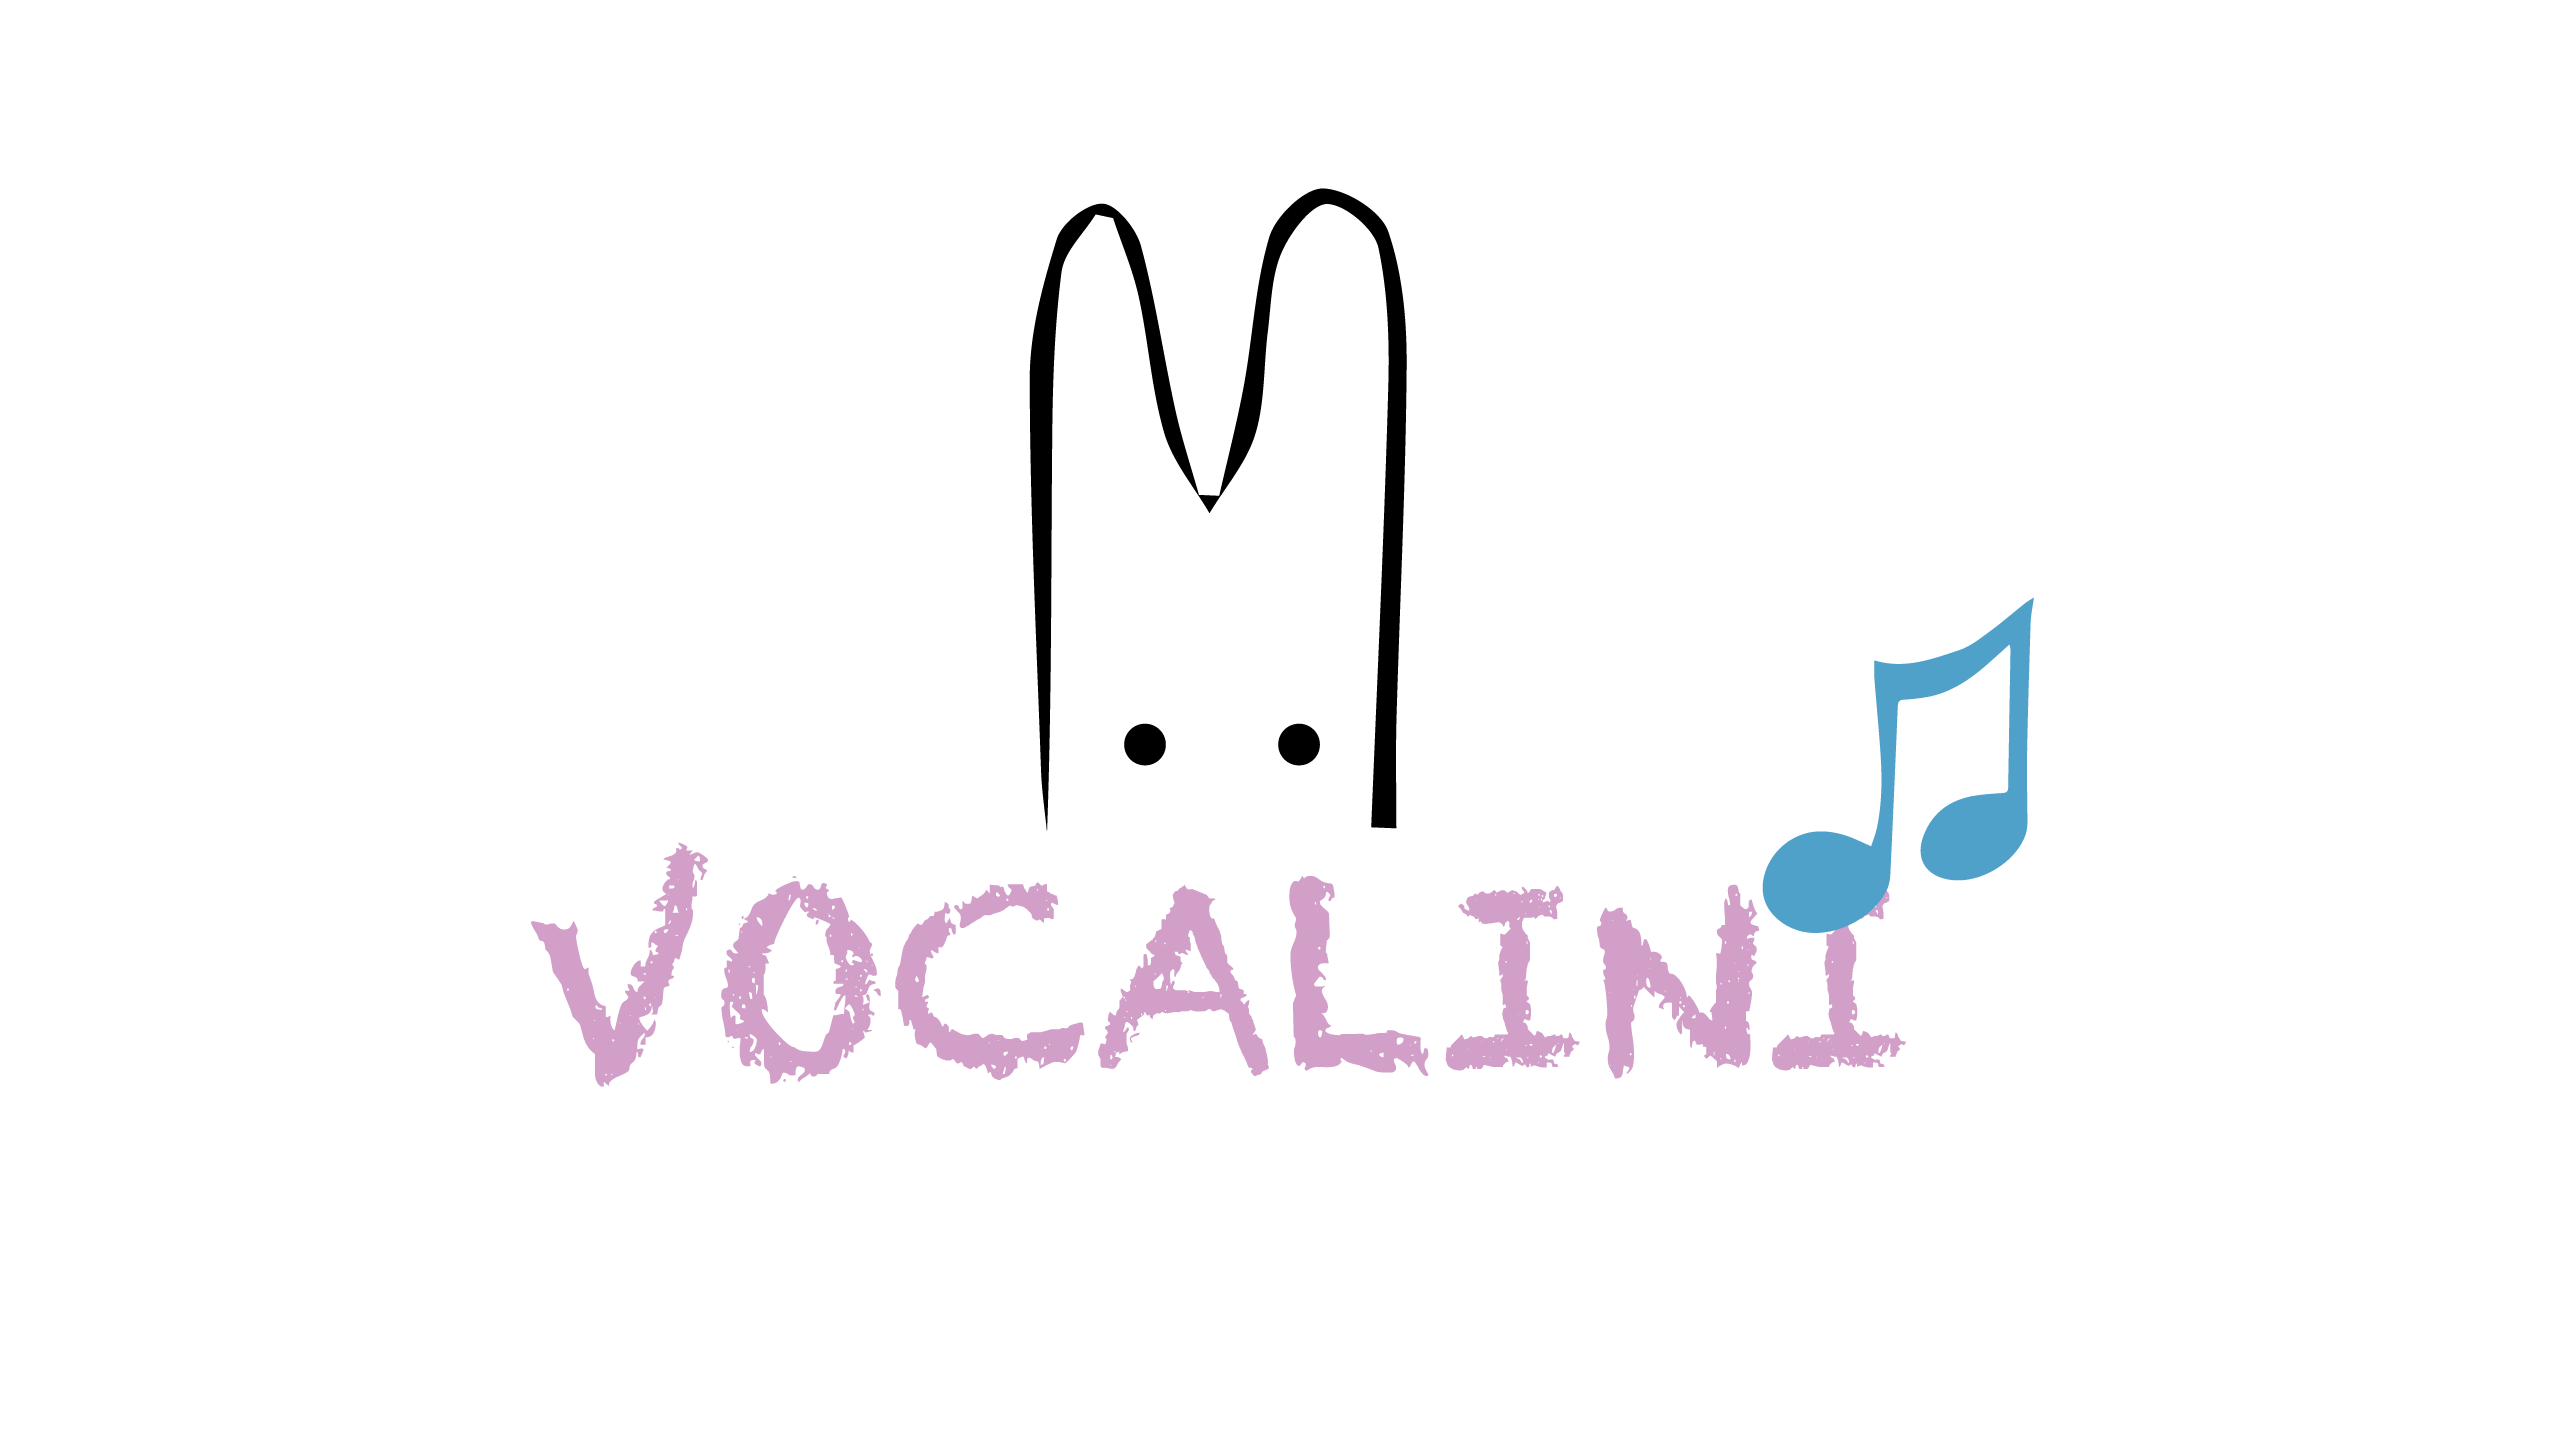 Vocalini logo.